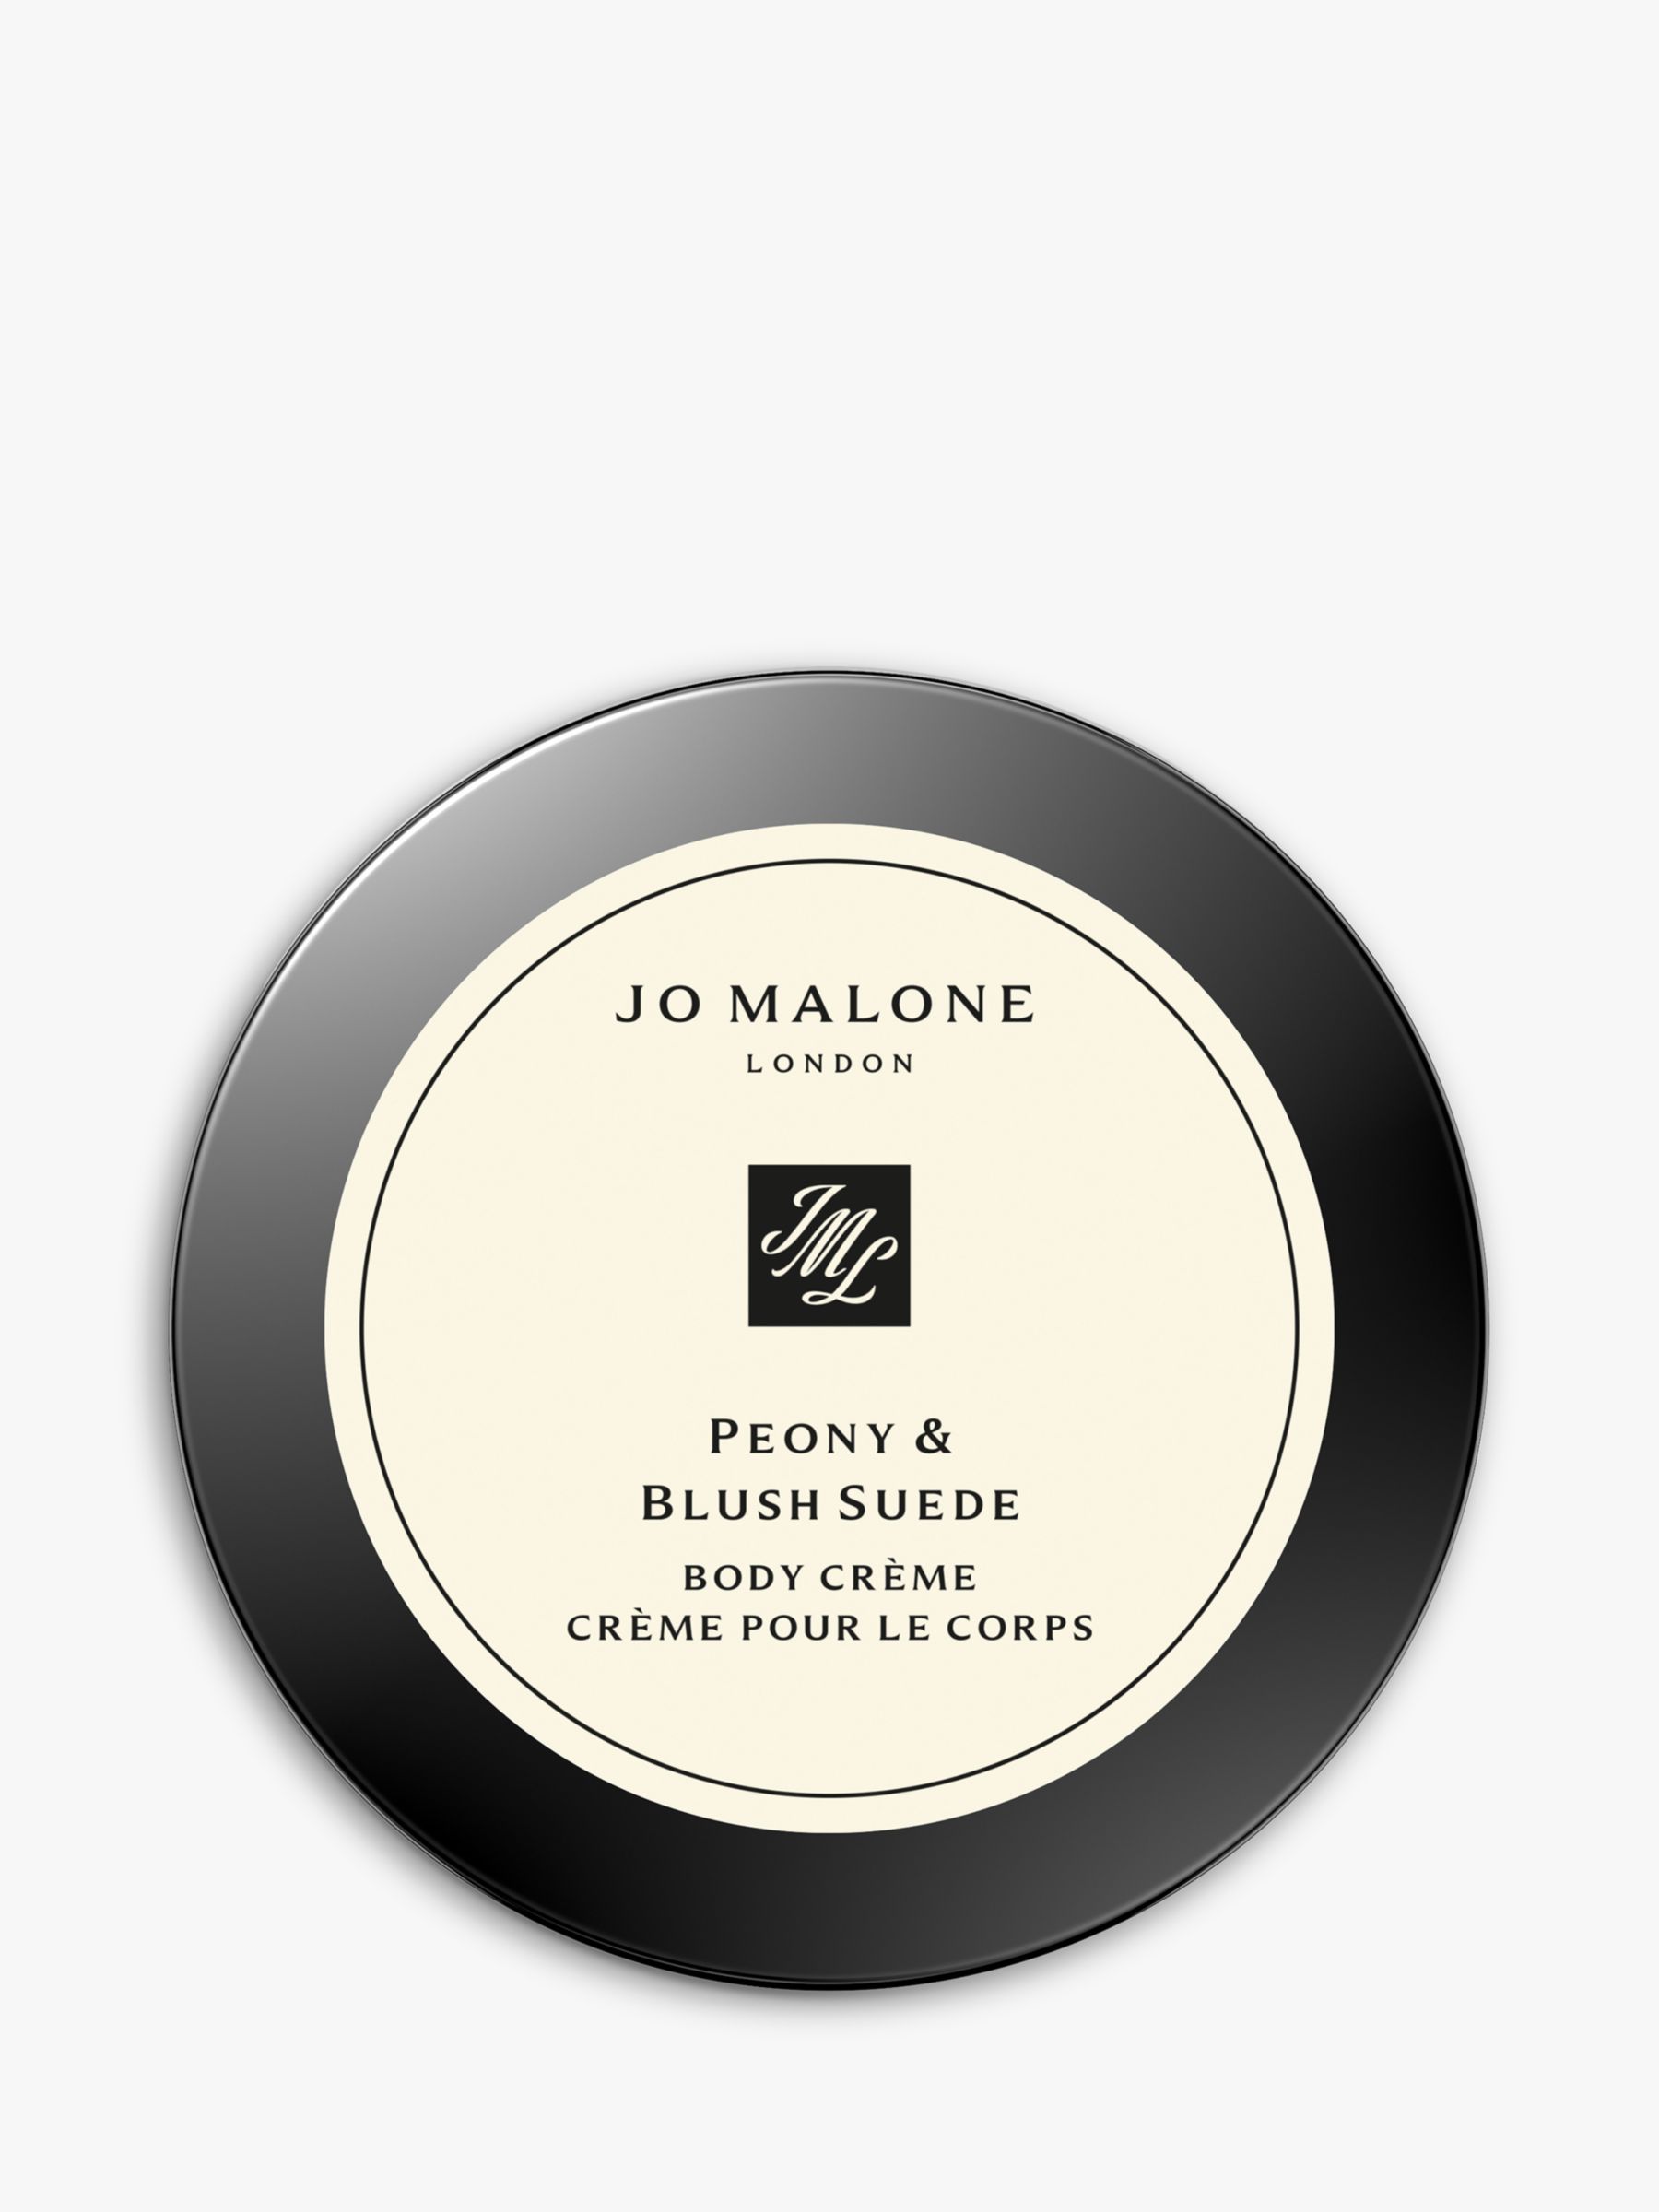 Jo Malone London Peony & Blush Suede Body Crème, 50ml